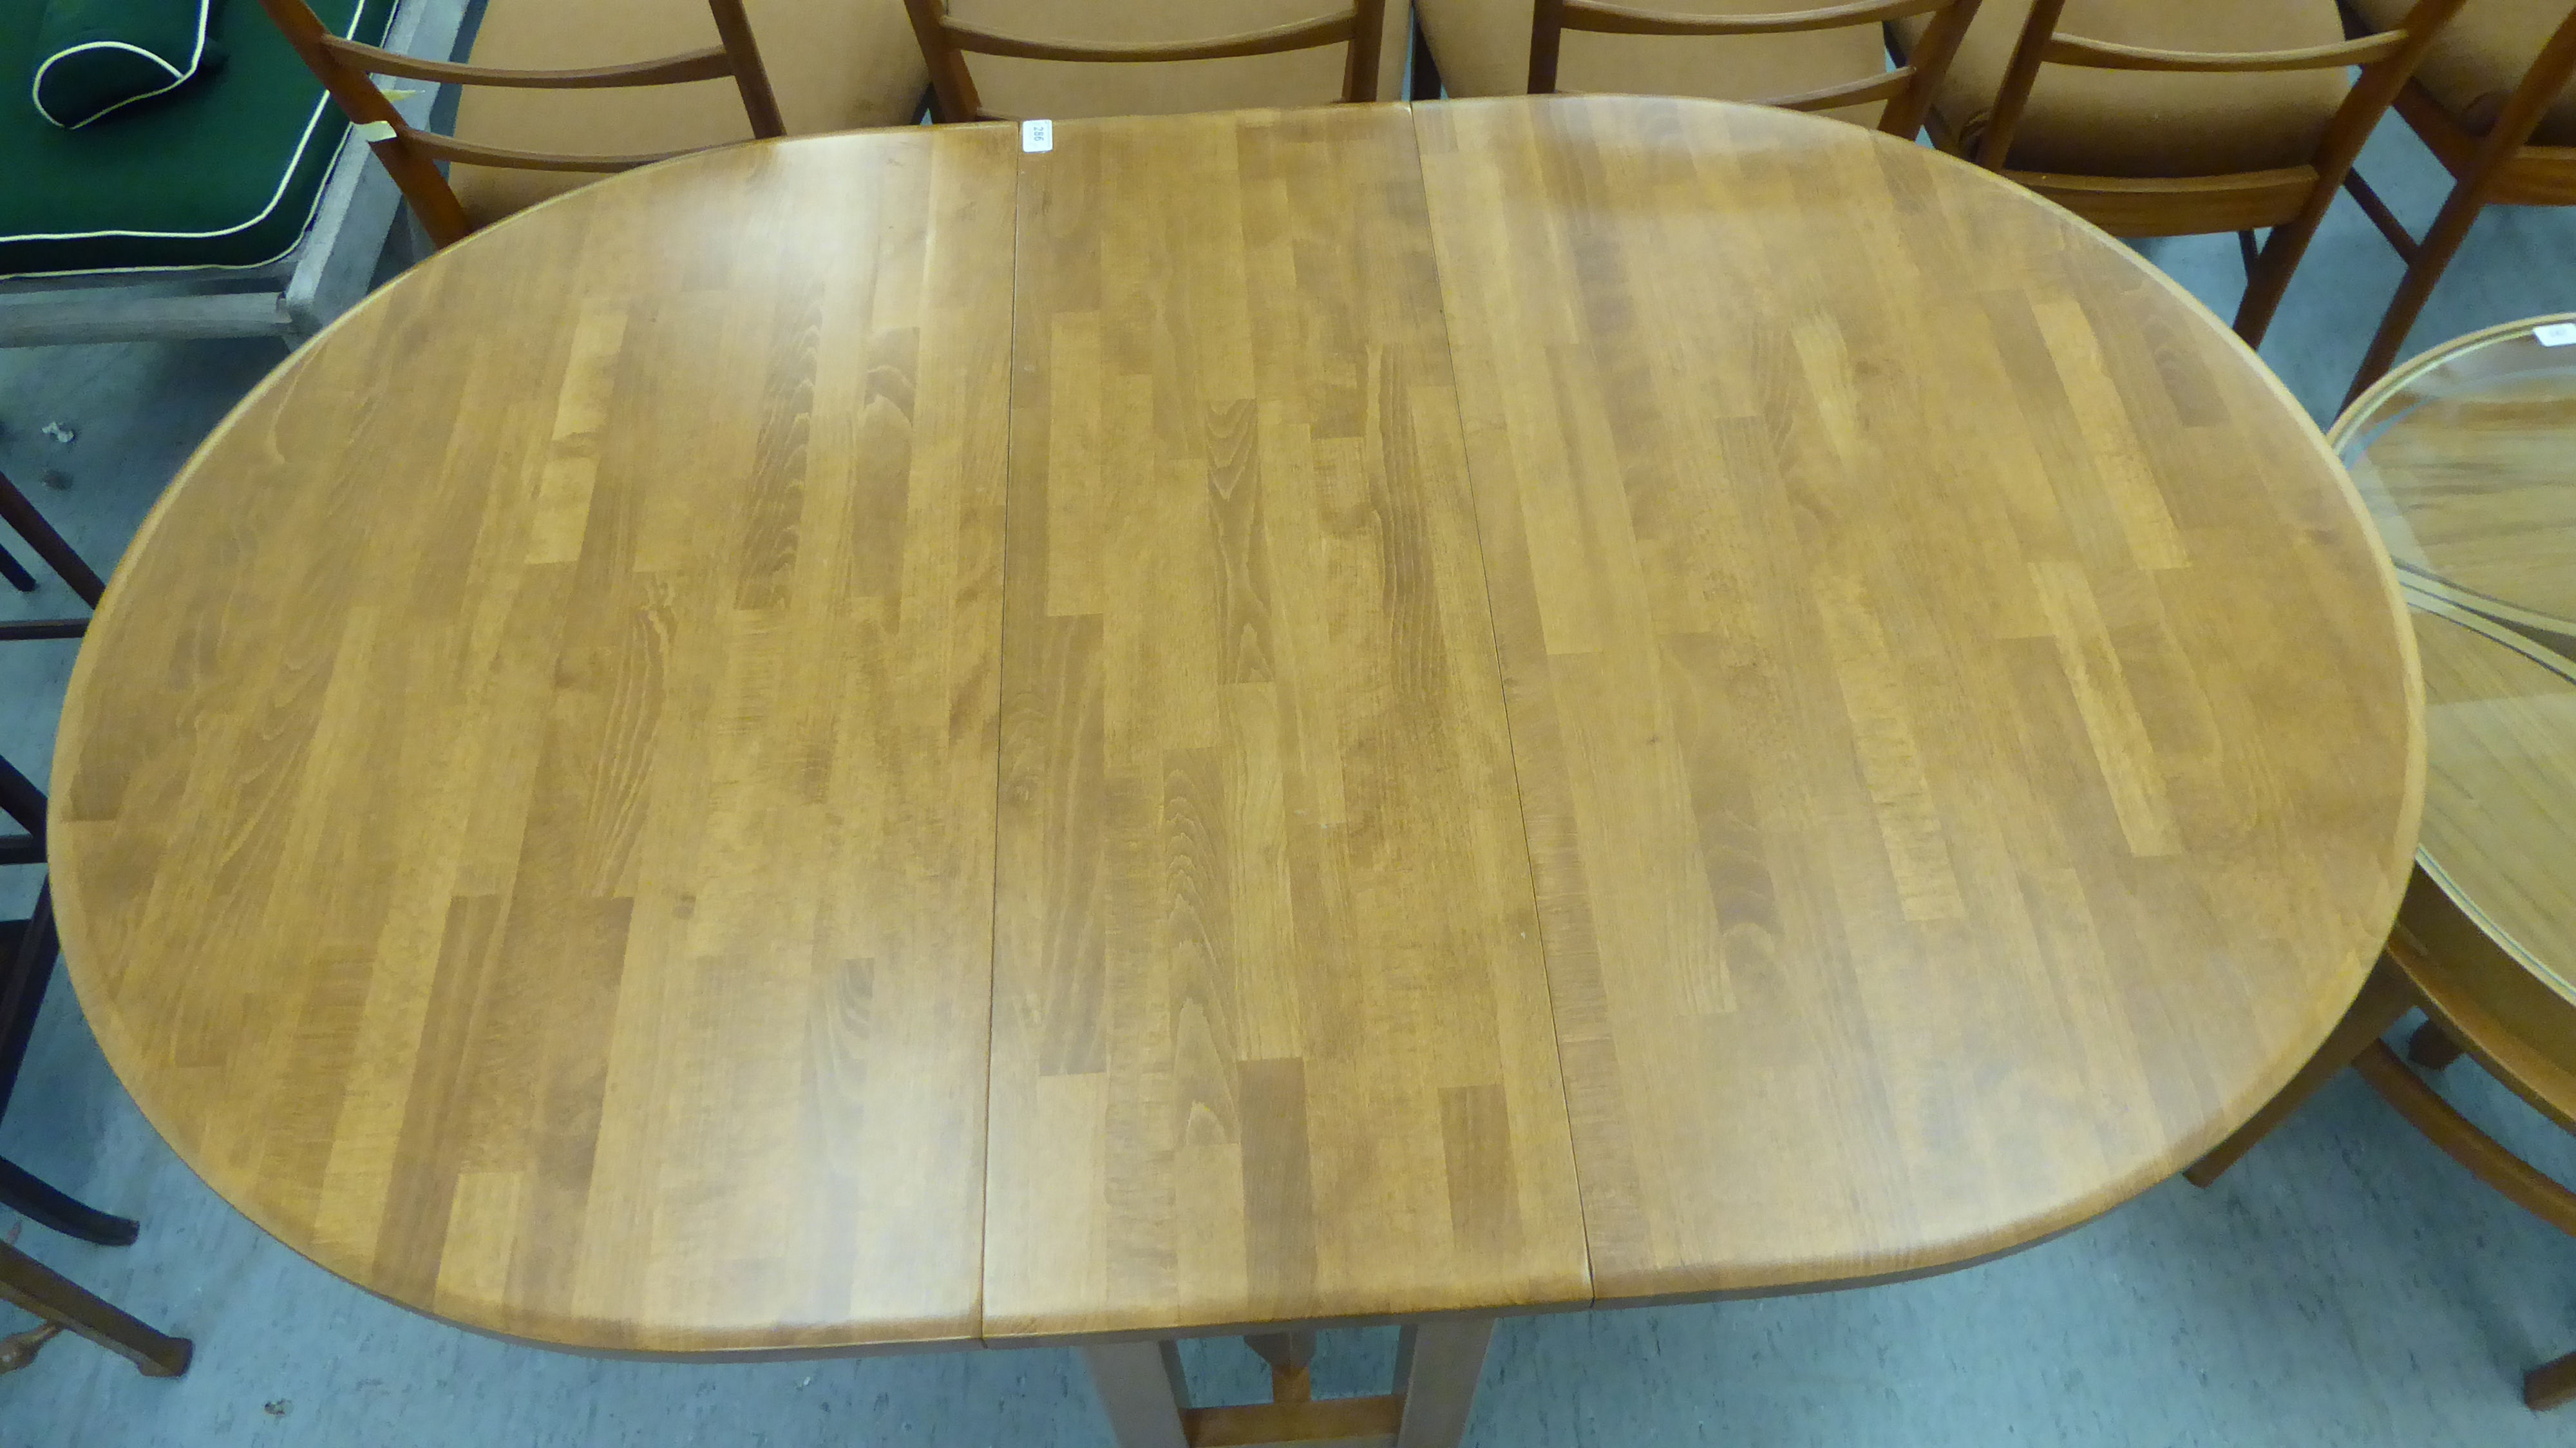 A modern stained beech drop leaf breakfast table  29"h  36"w  46"L open - Image 2 of 3